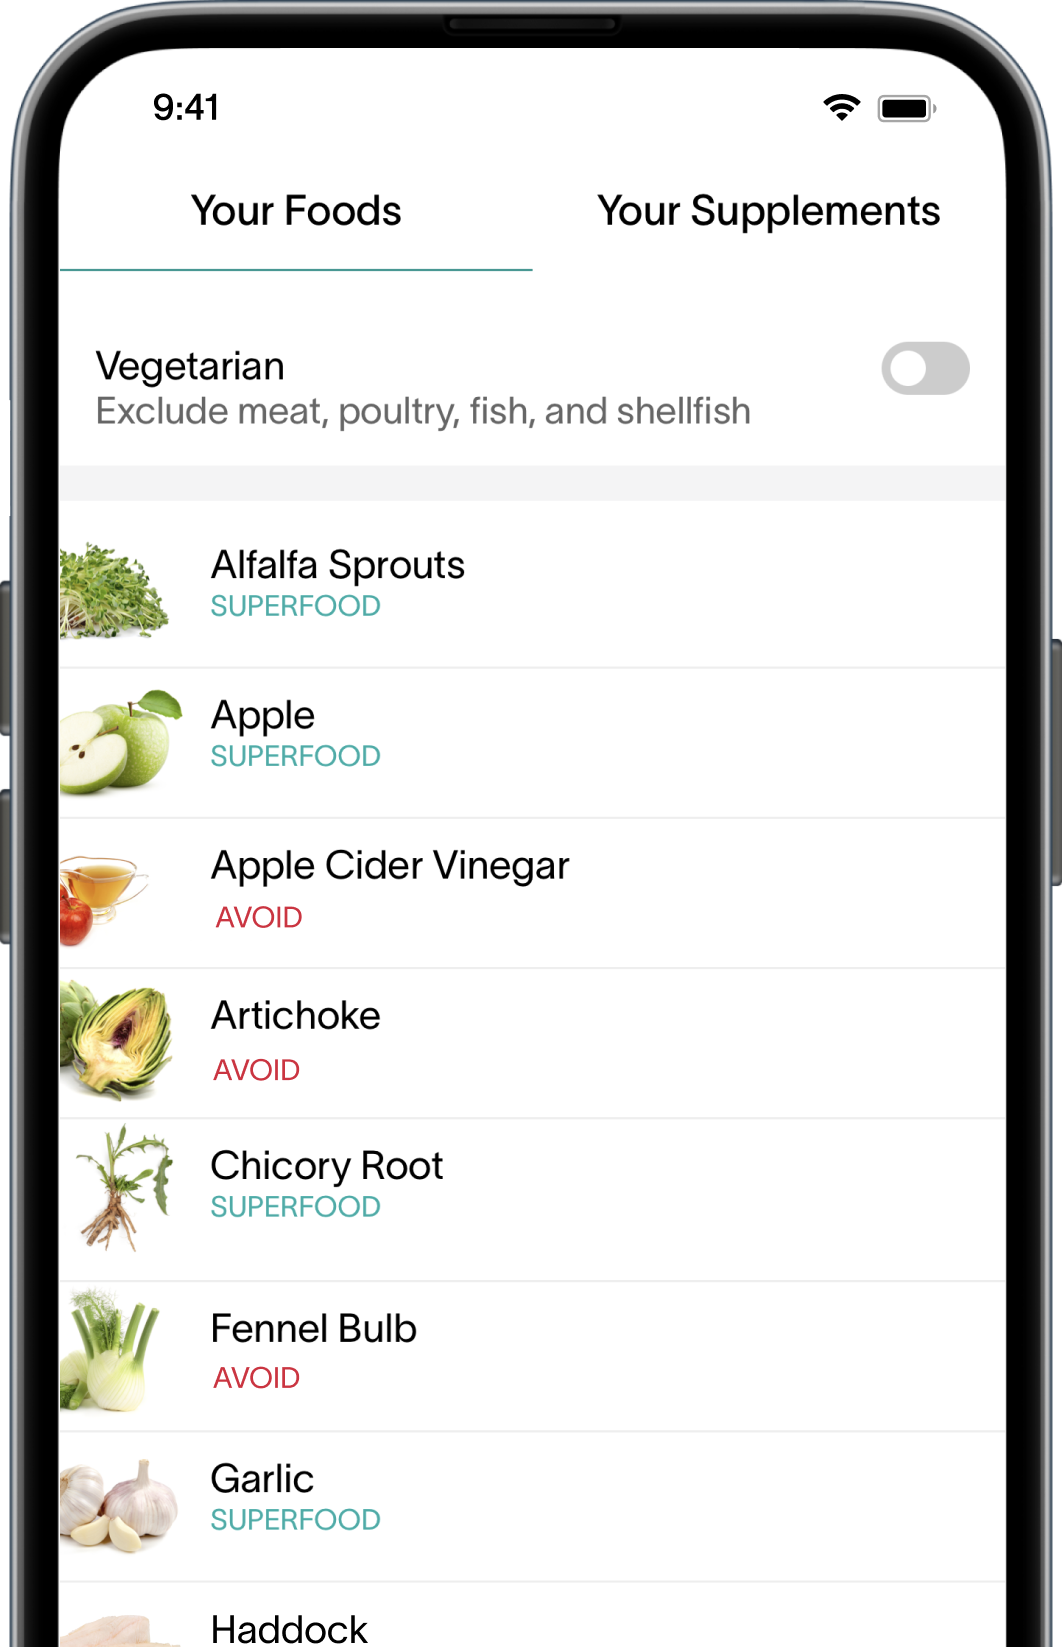 [Phone Screen] Viome App - Your Food